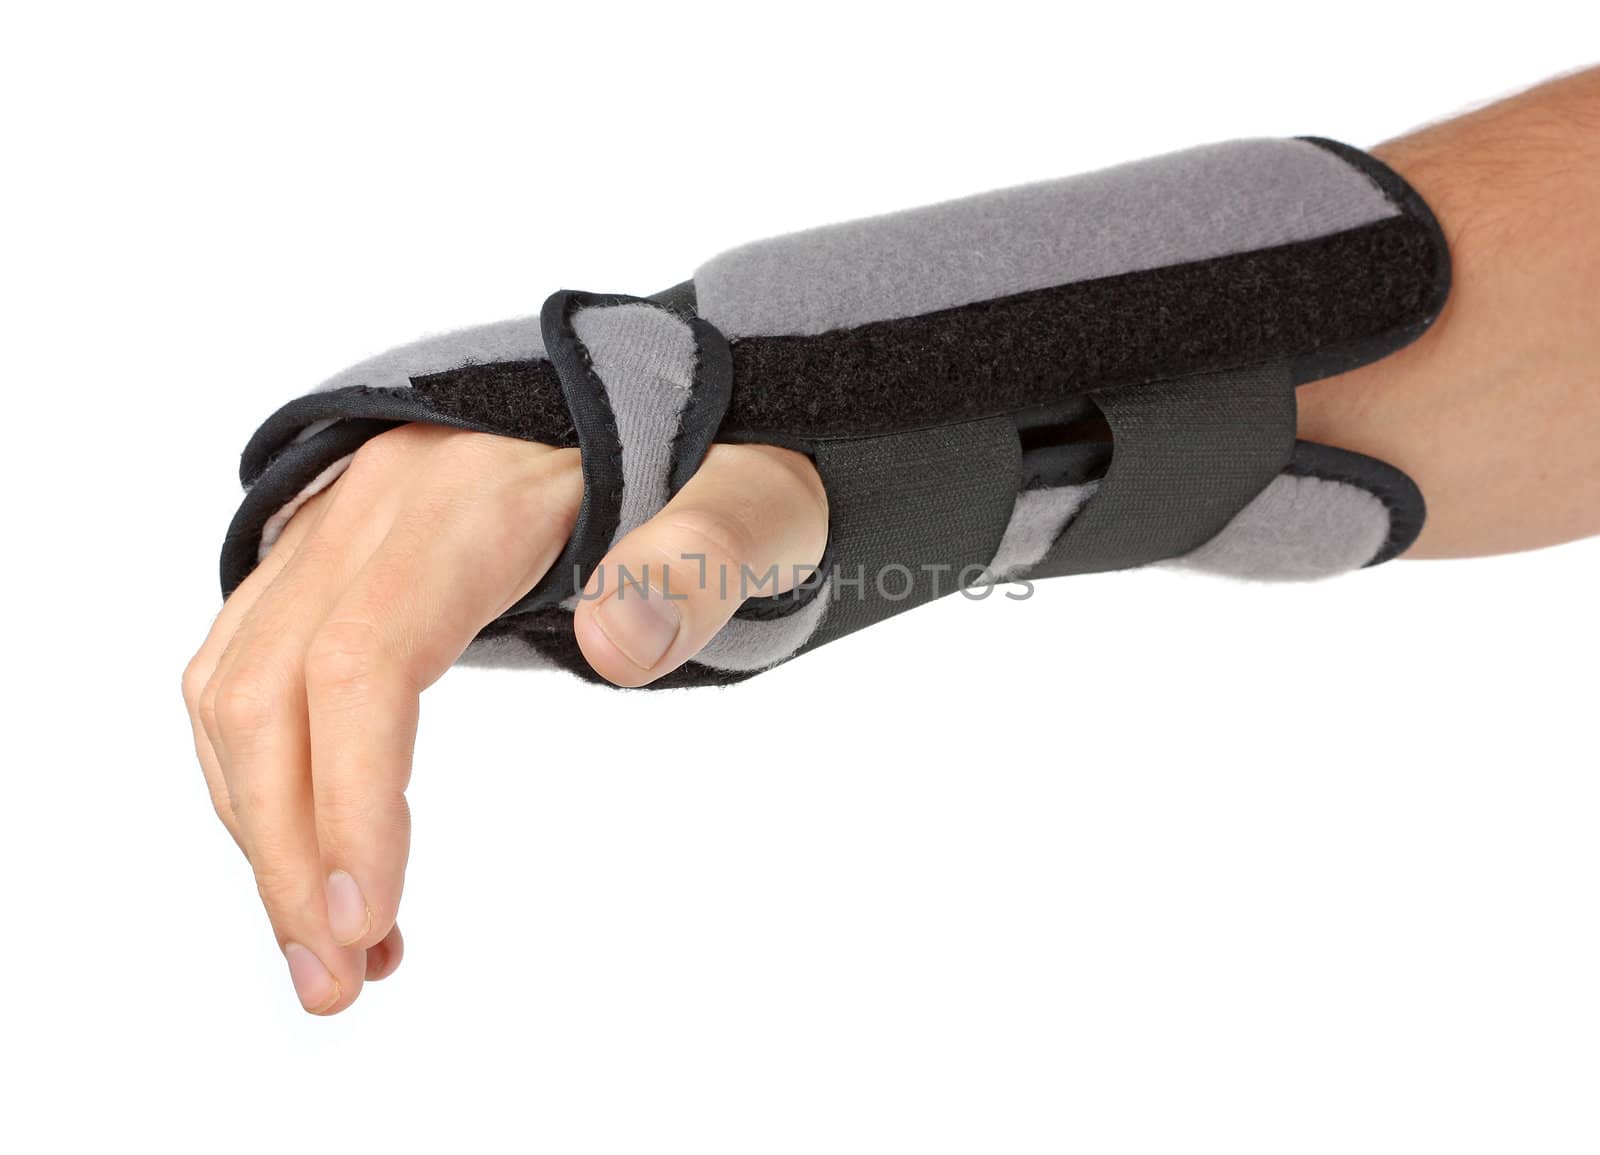 Human hand with a wrist brace by Erdosain